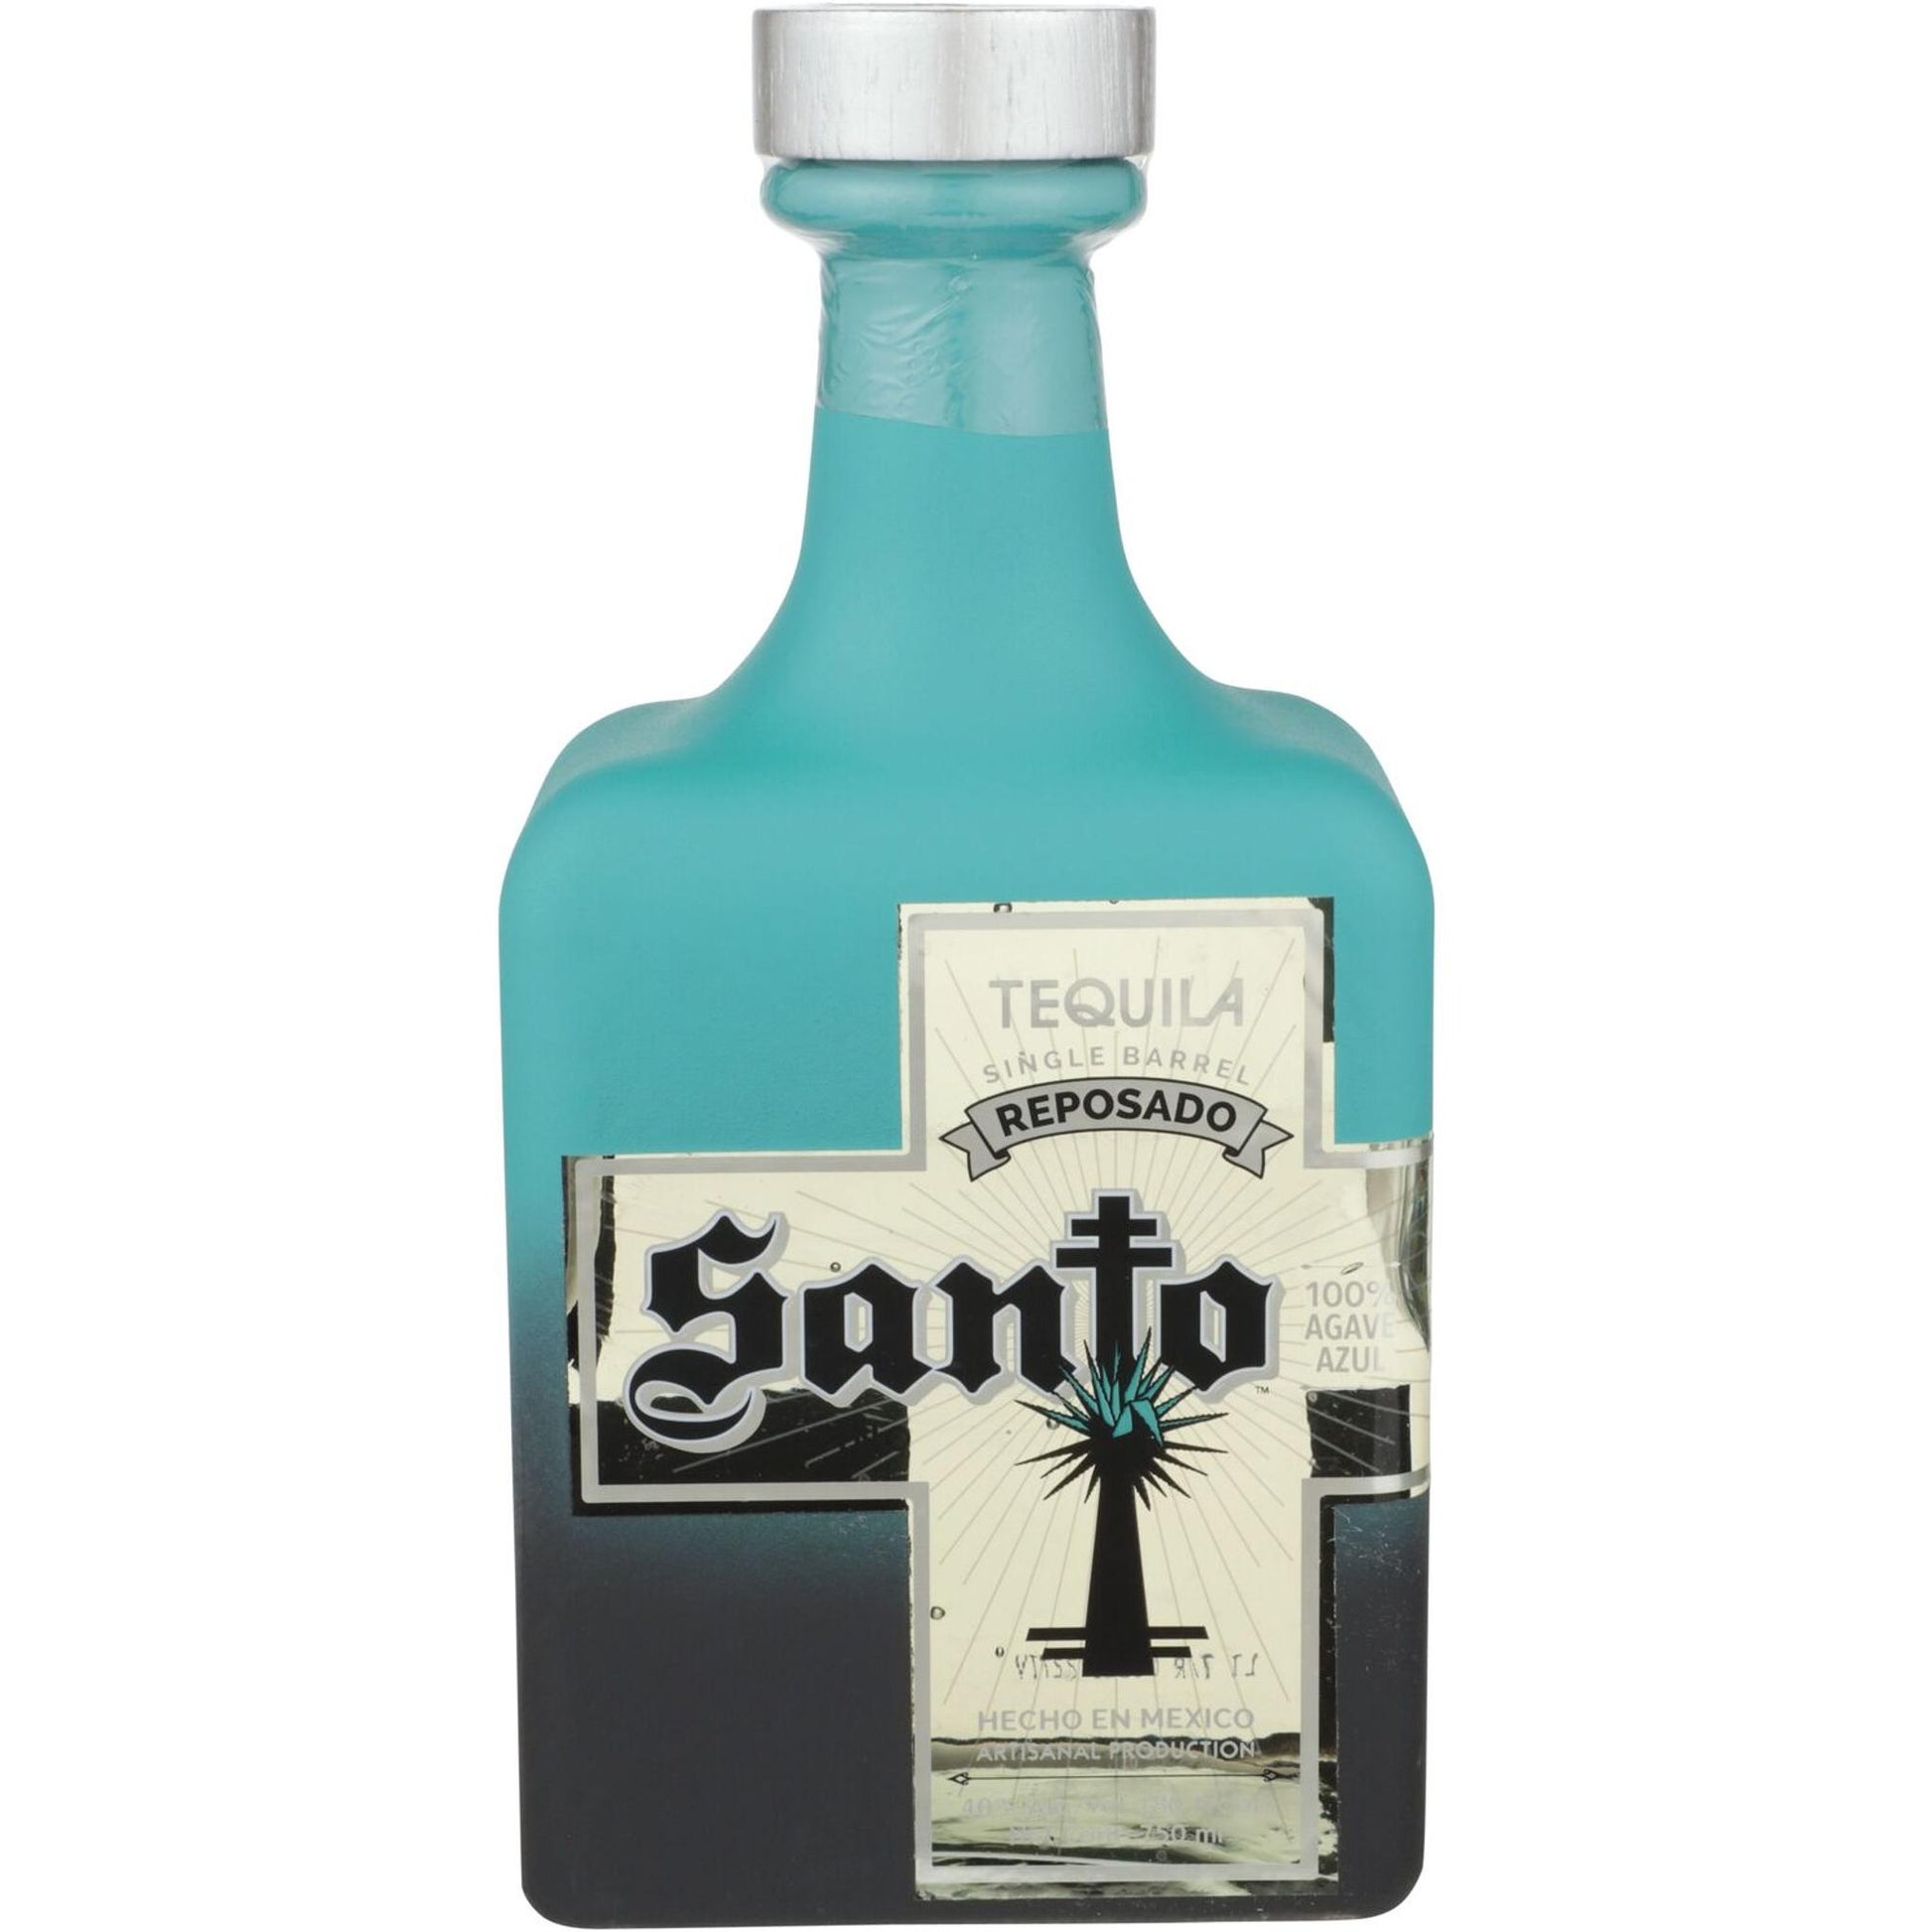 Santo Tequila Single Barrel Reposado - Liquor Geeks